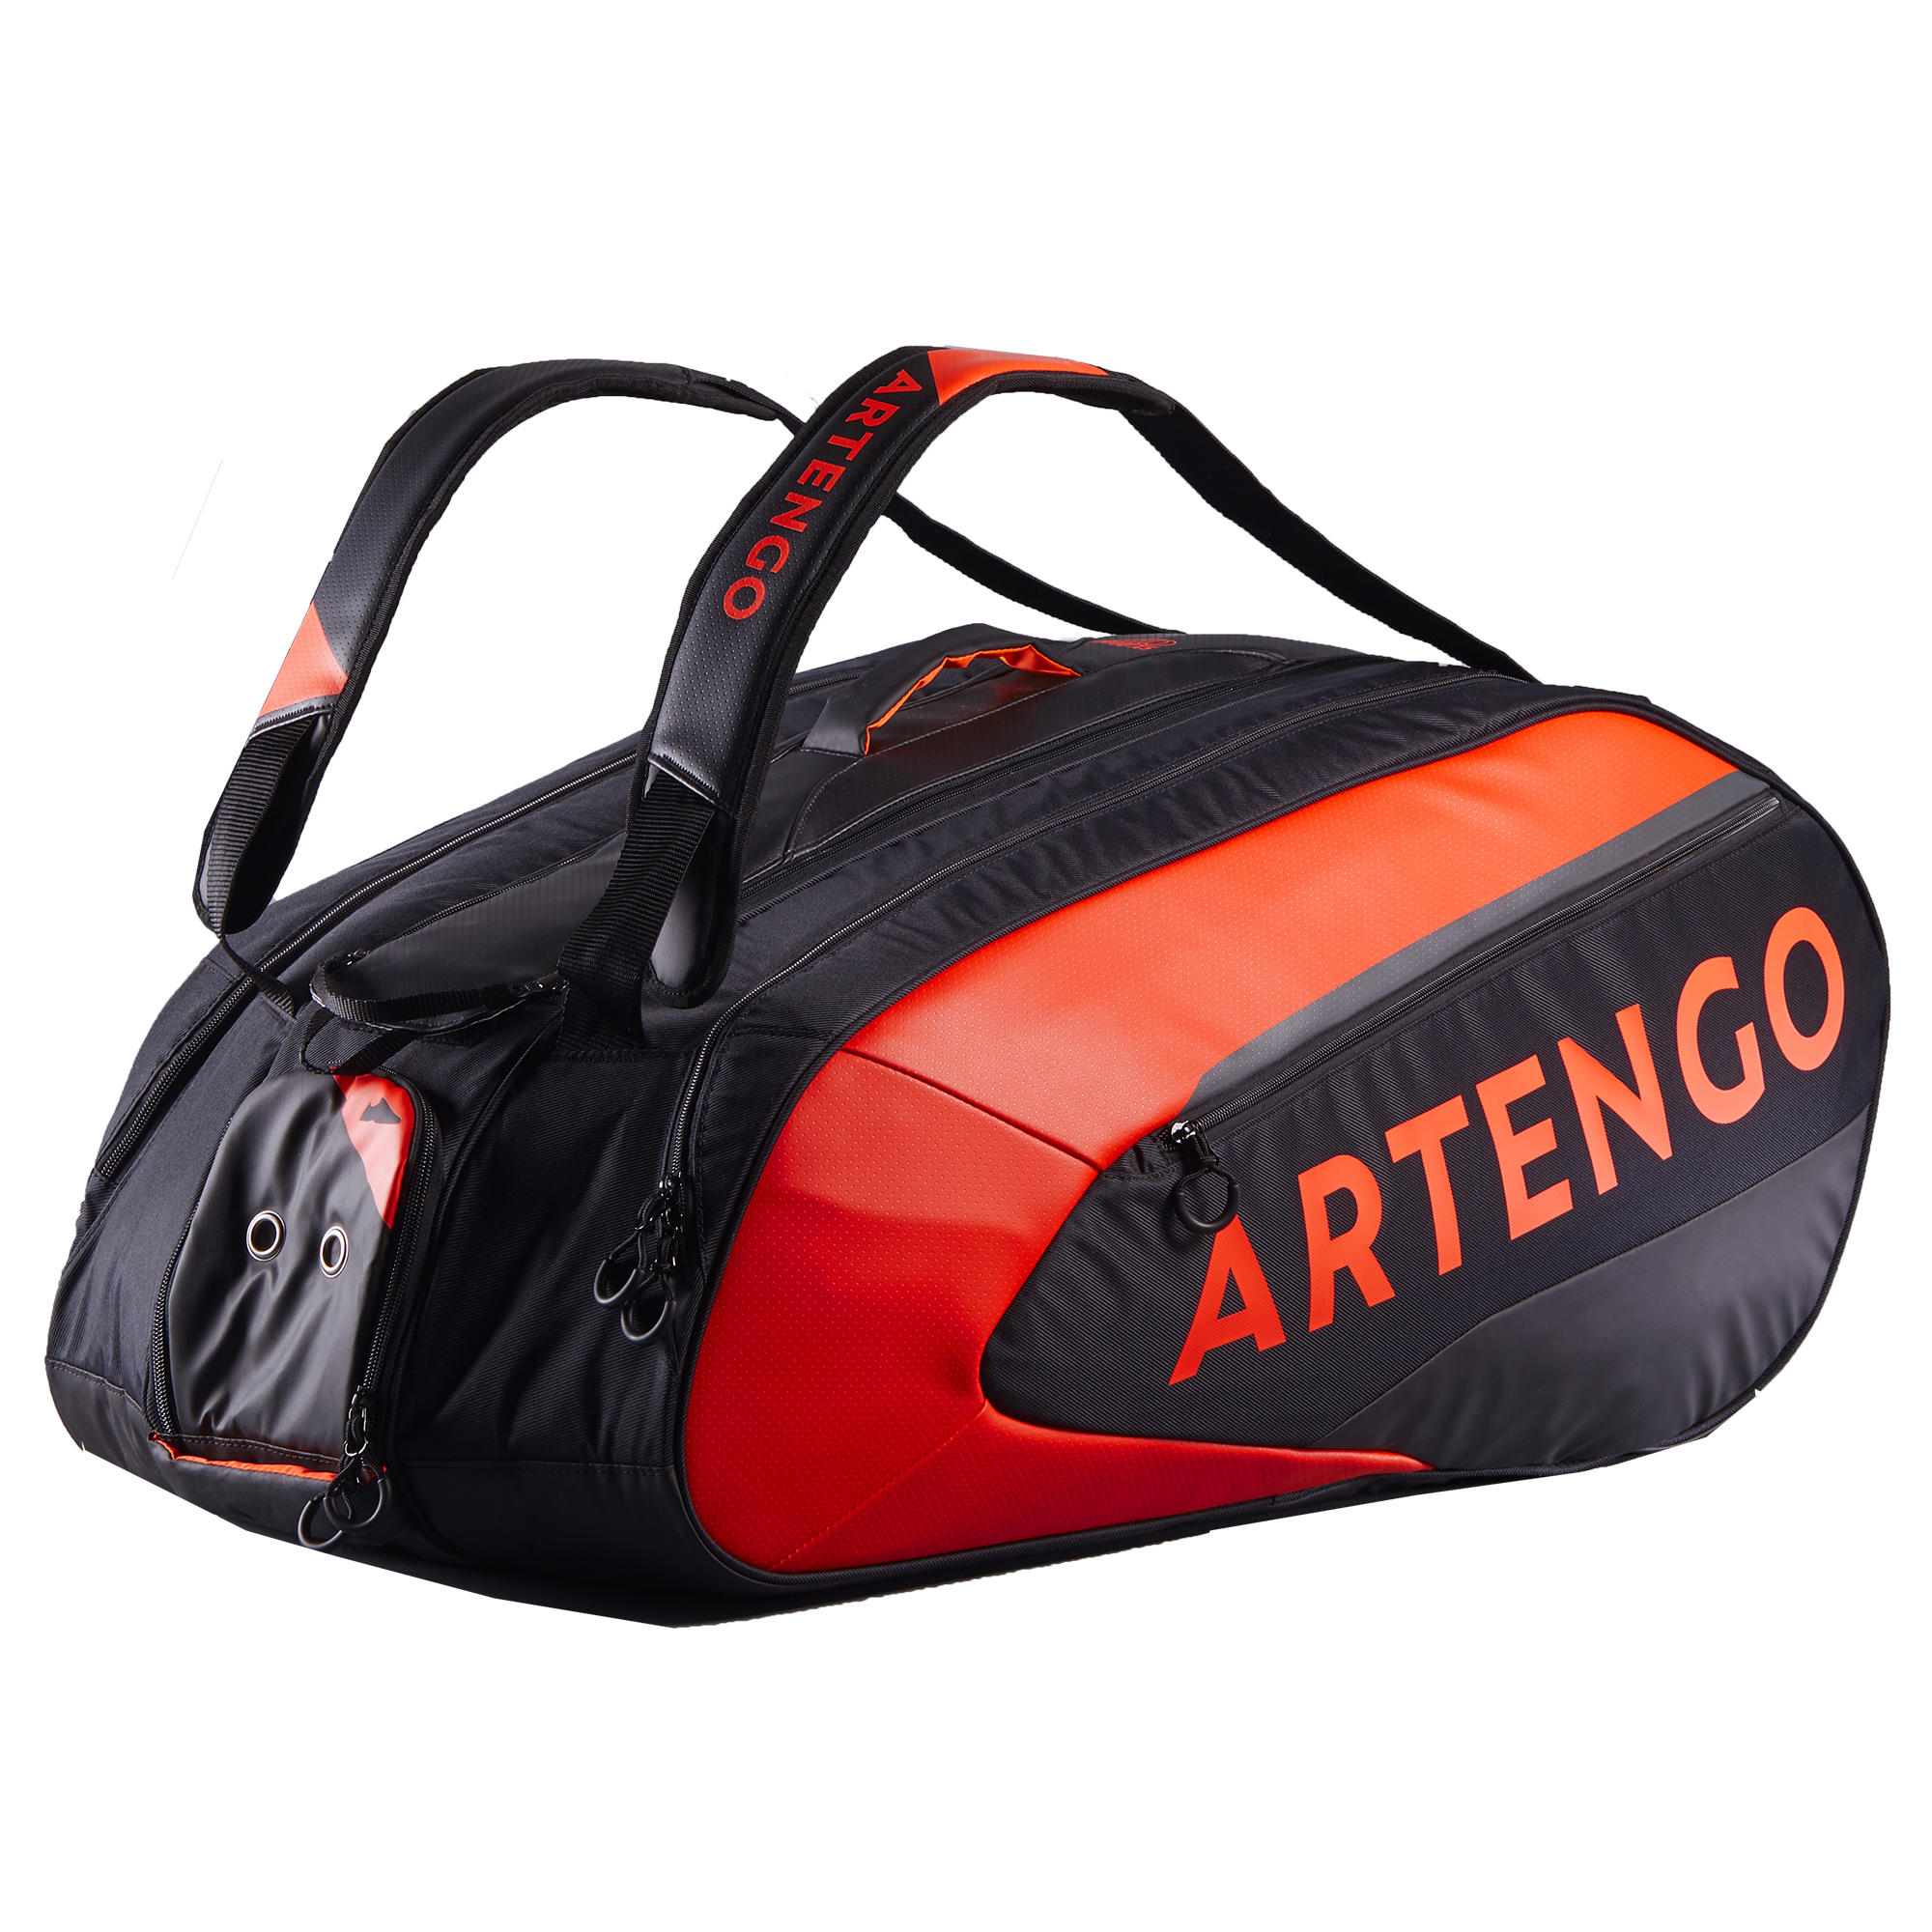 Tennis Bag 960 L - Black/Orange - Decathlon